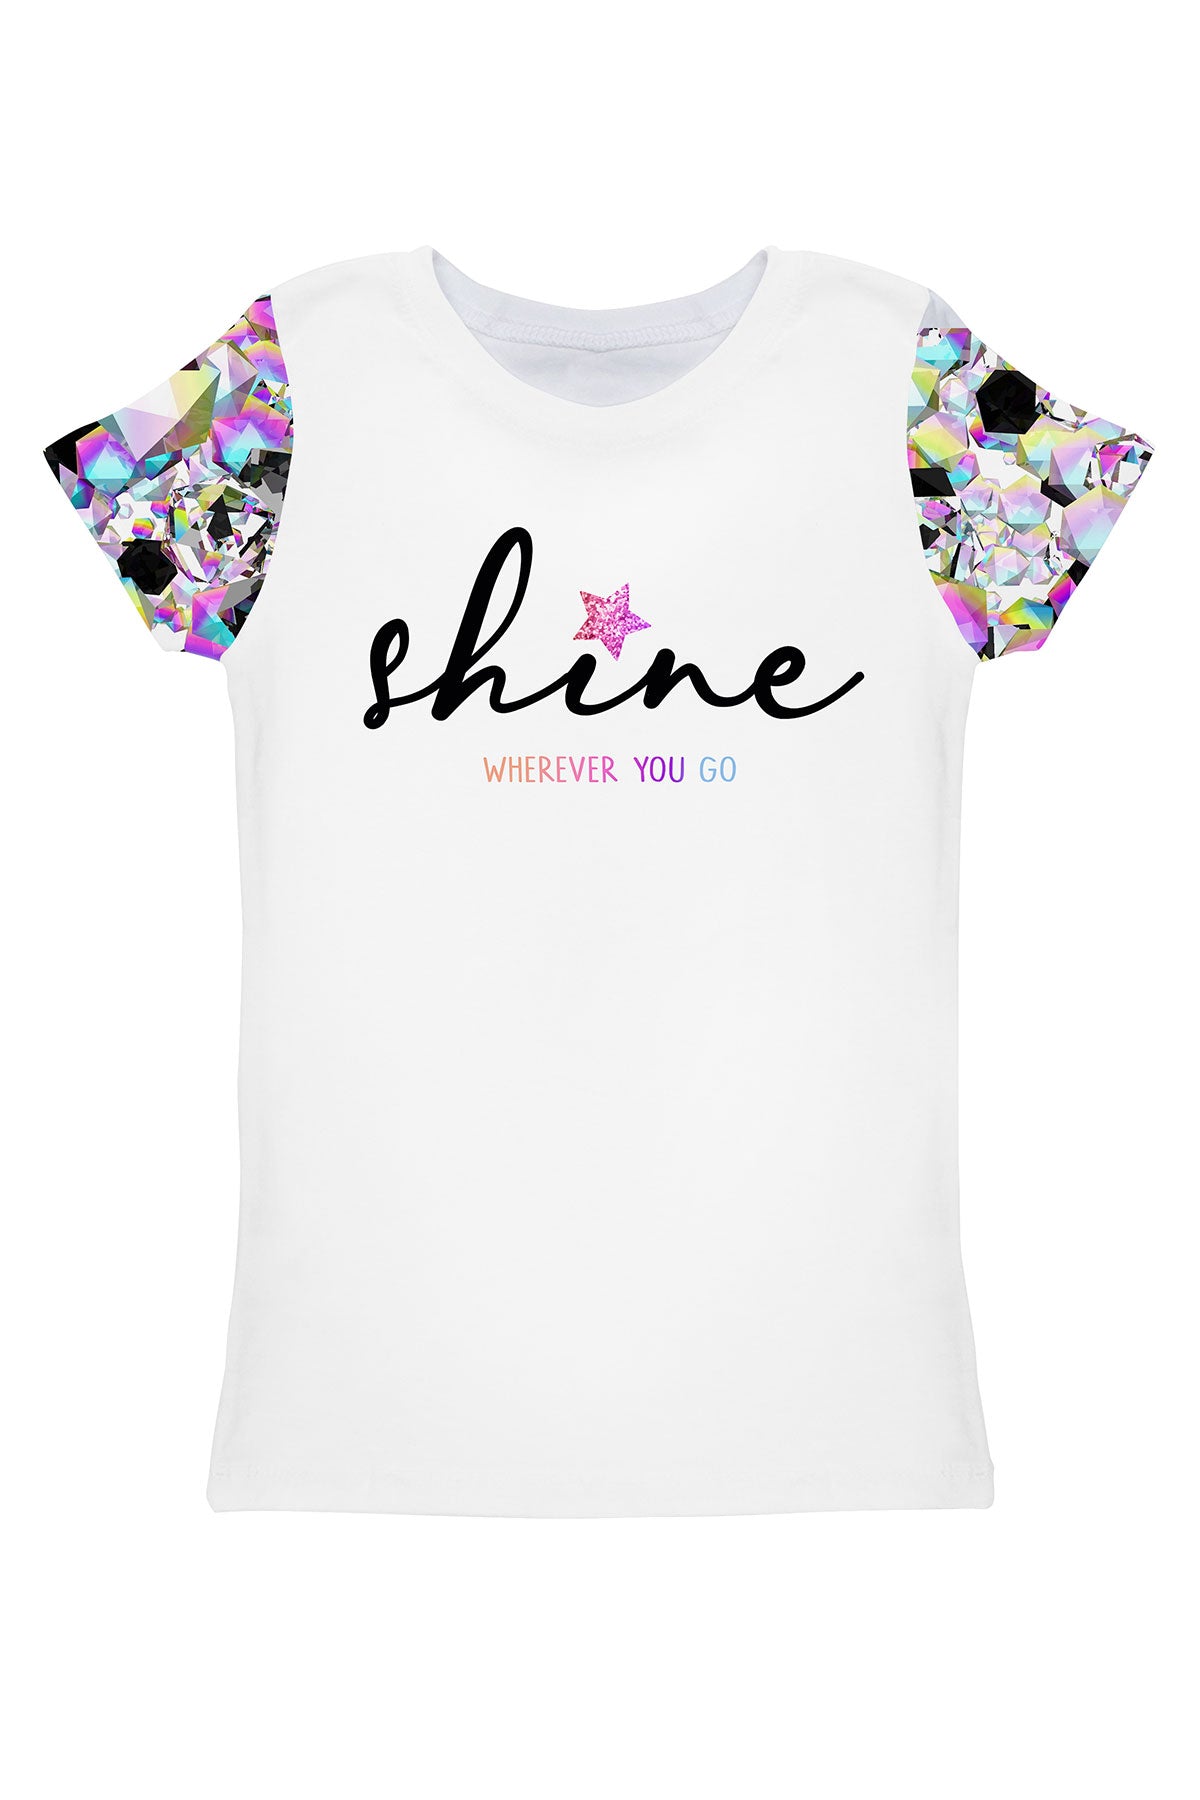 Brilliance Zoe White Shining Cute Slogan Designer T-Shirt - Women - Pineapple Clothing